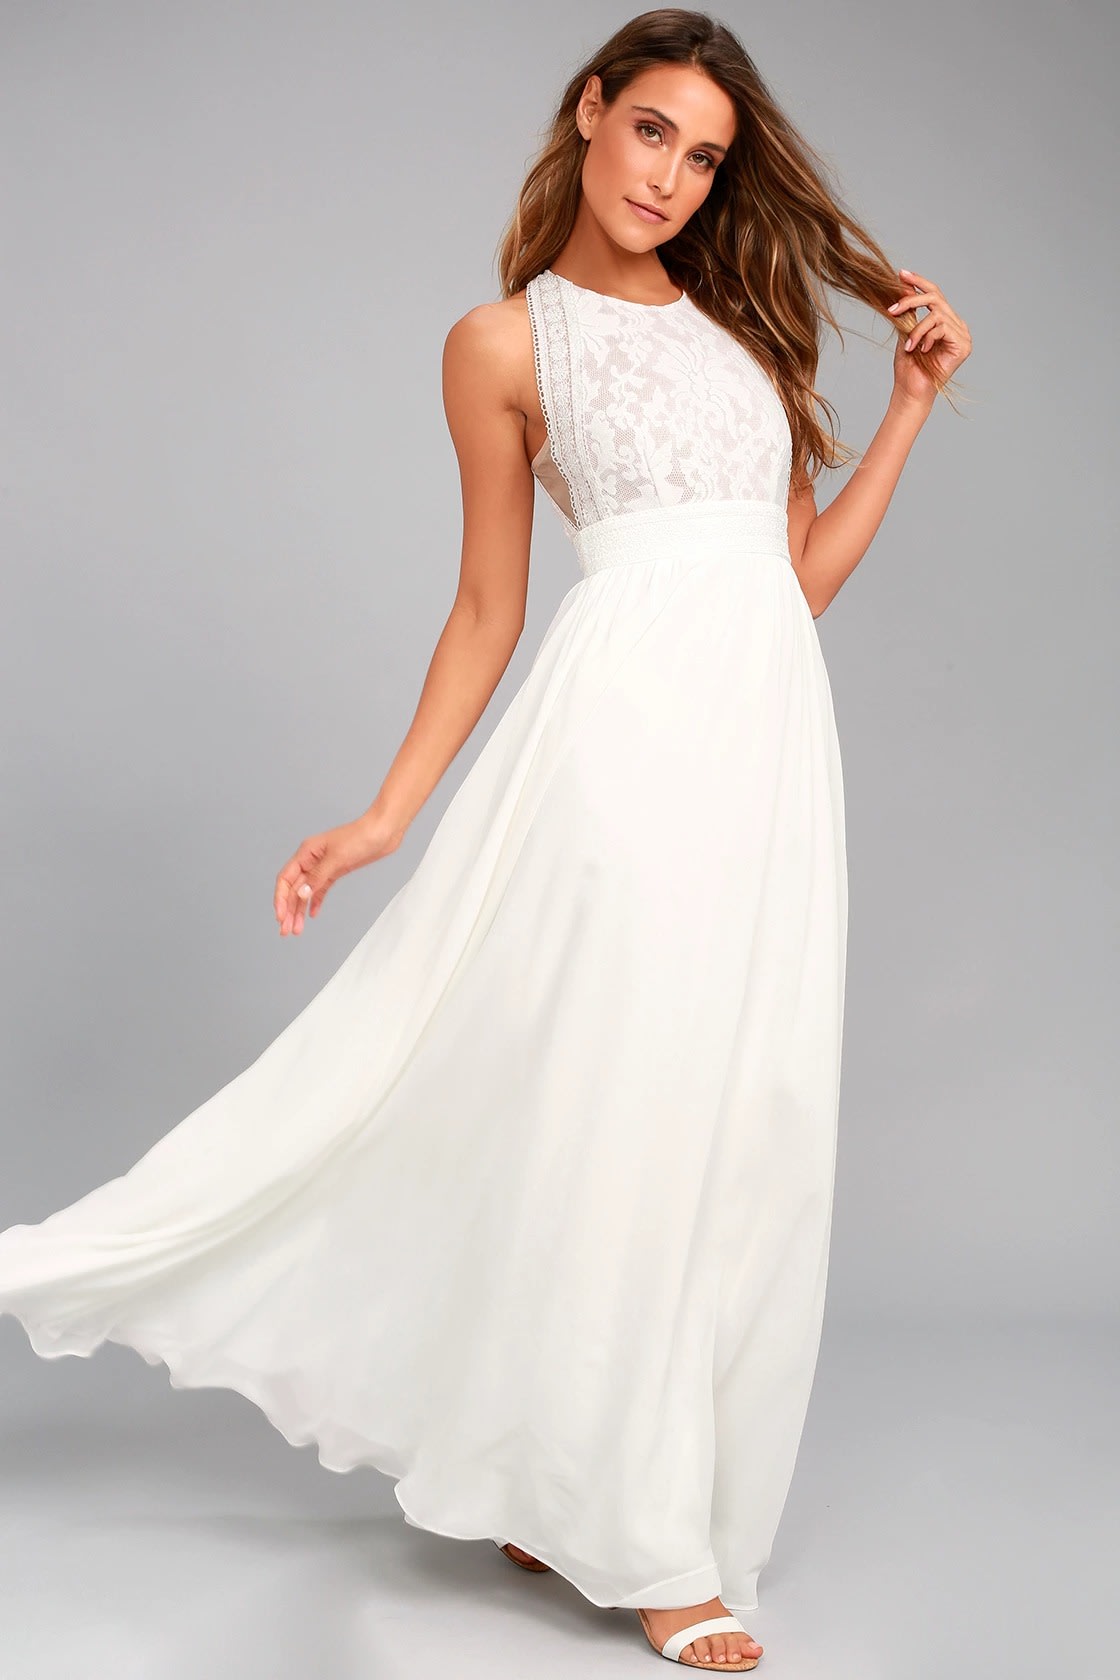 Lovely White Dress - Floral Lace Dress - Maxi Dress - Lulus